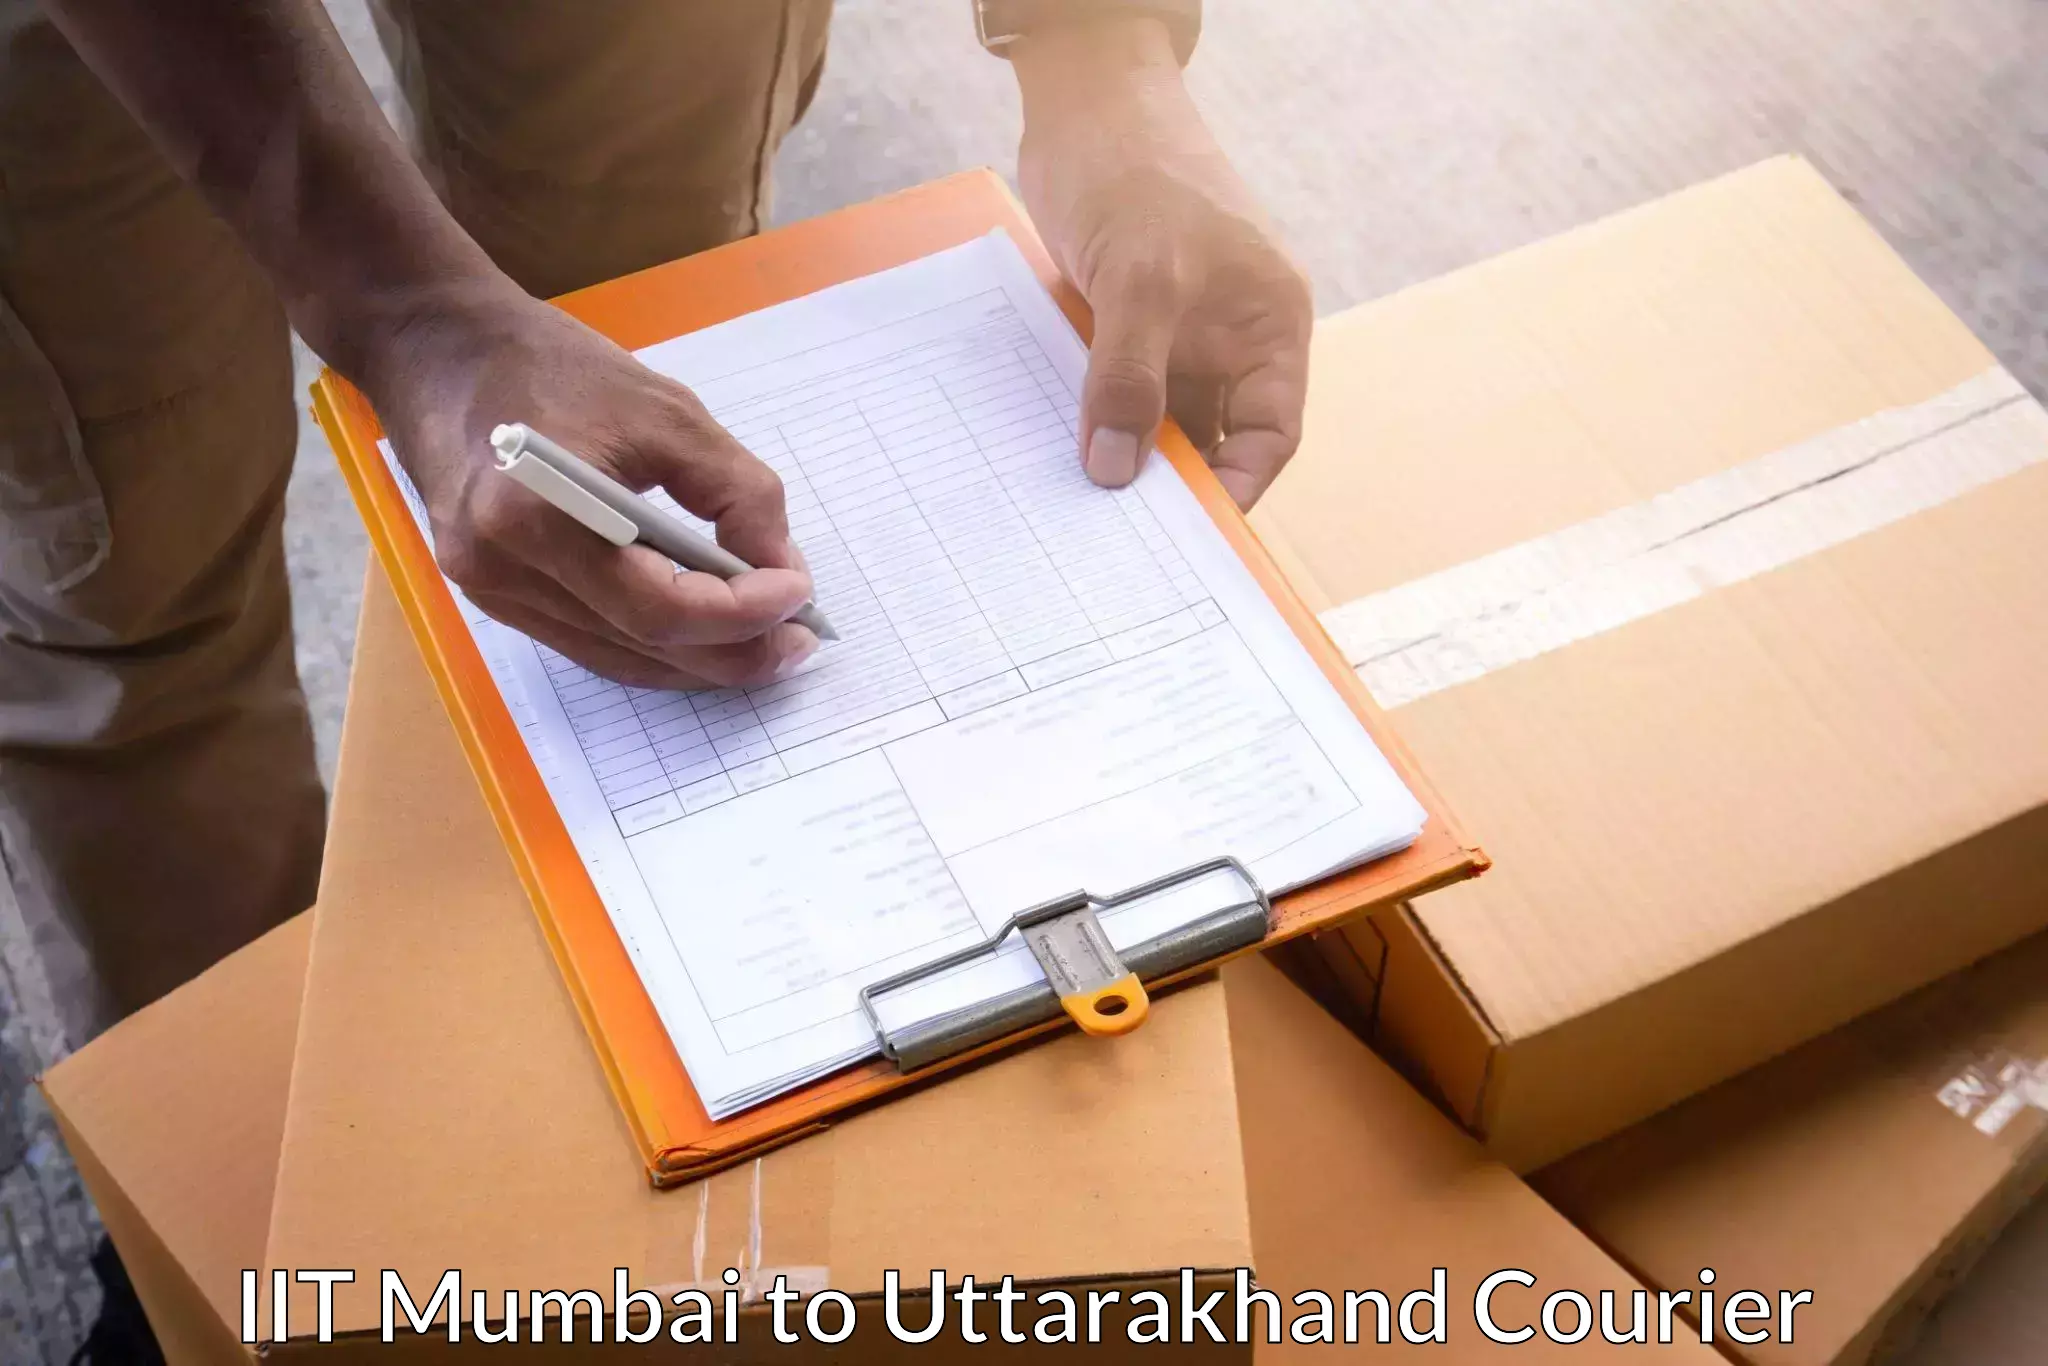 Courier service comparison in IIT Mumbai to Dehradun